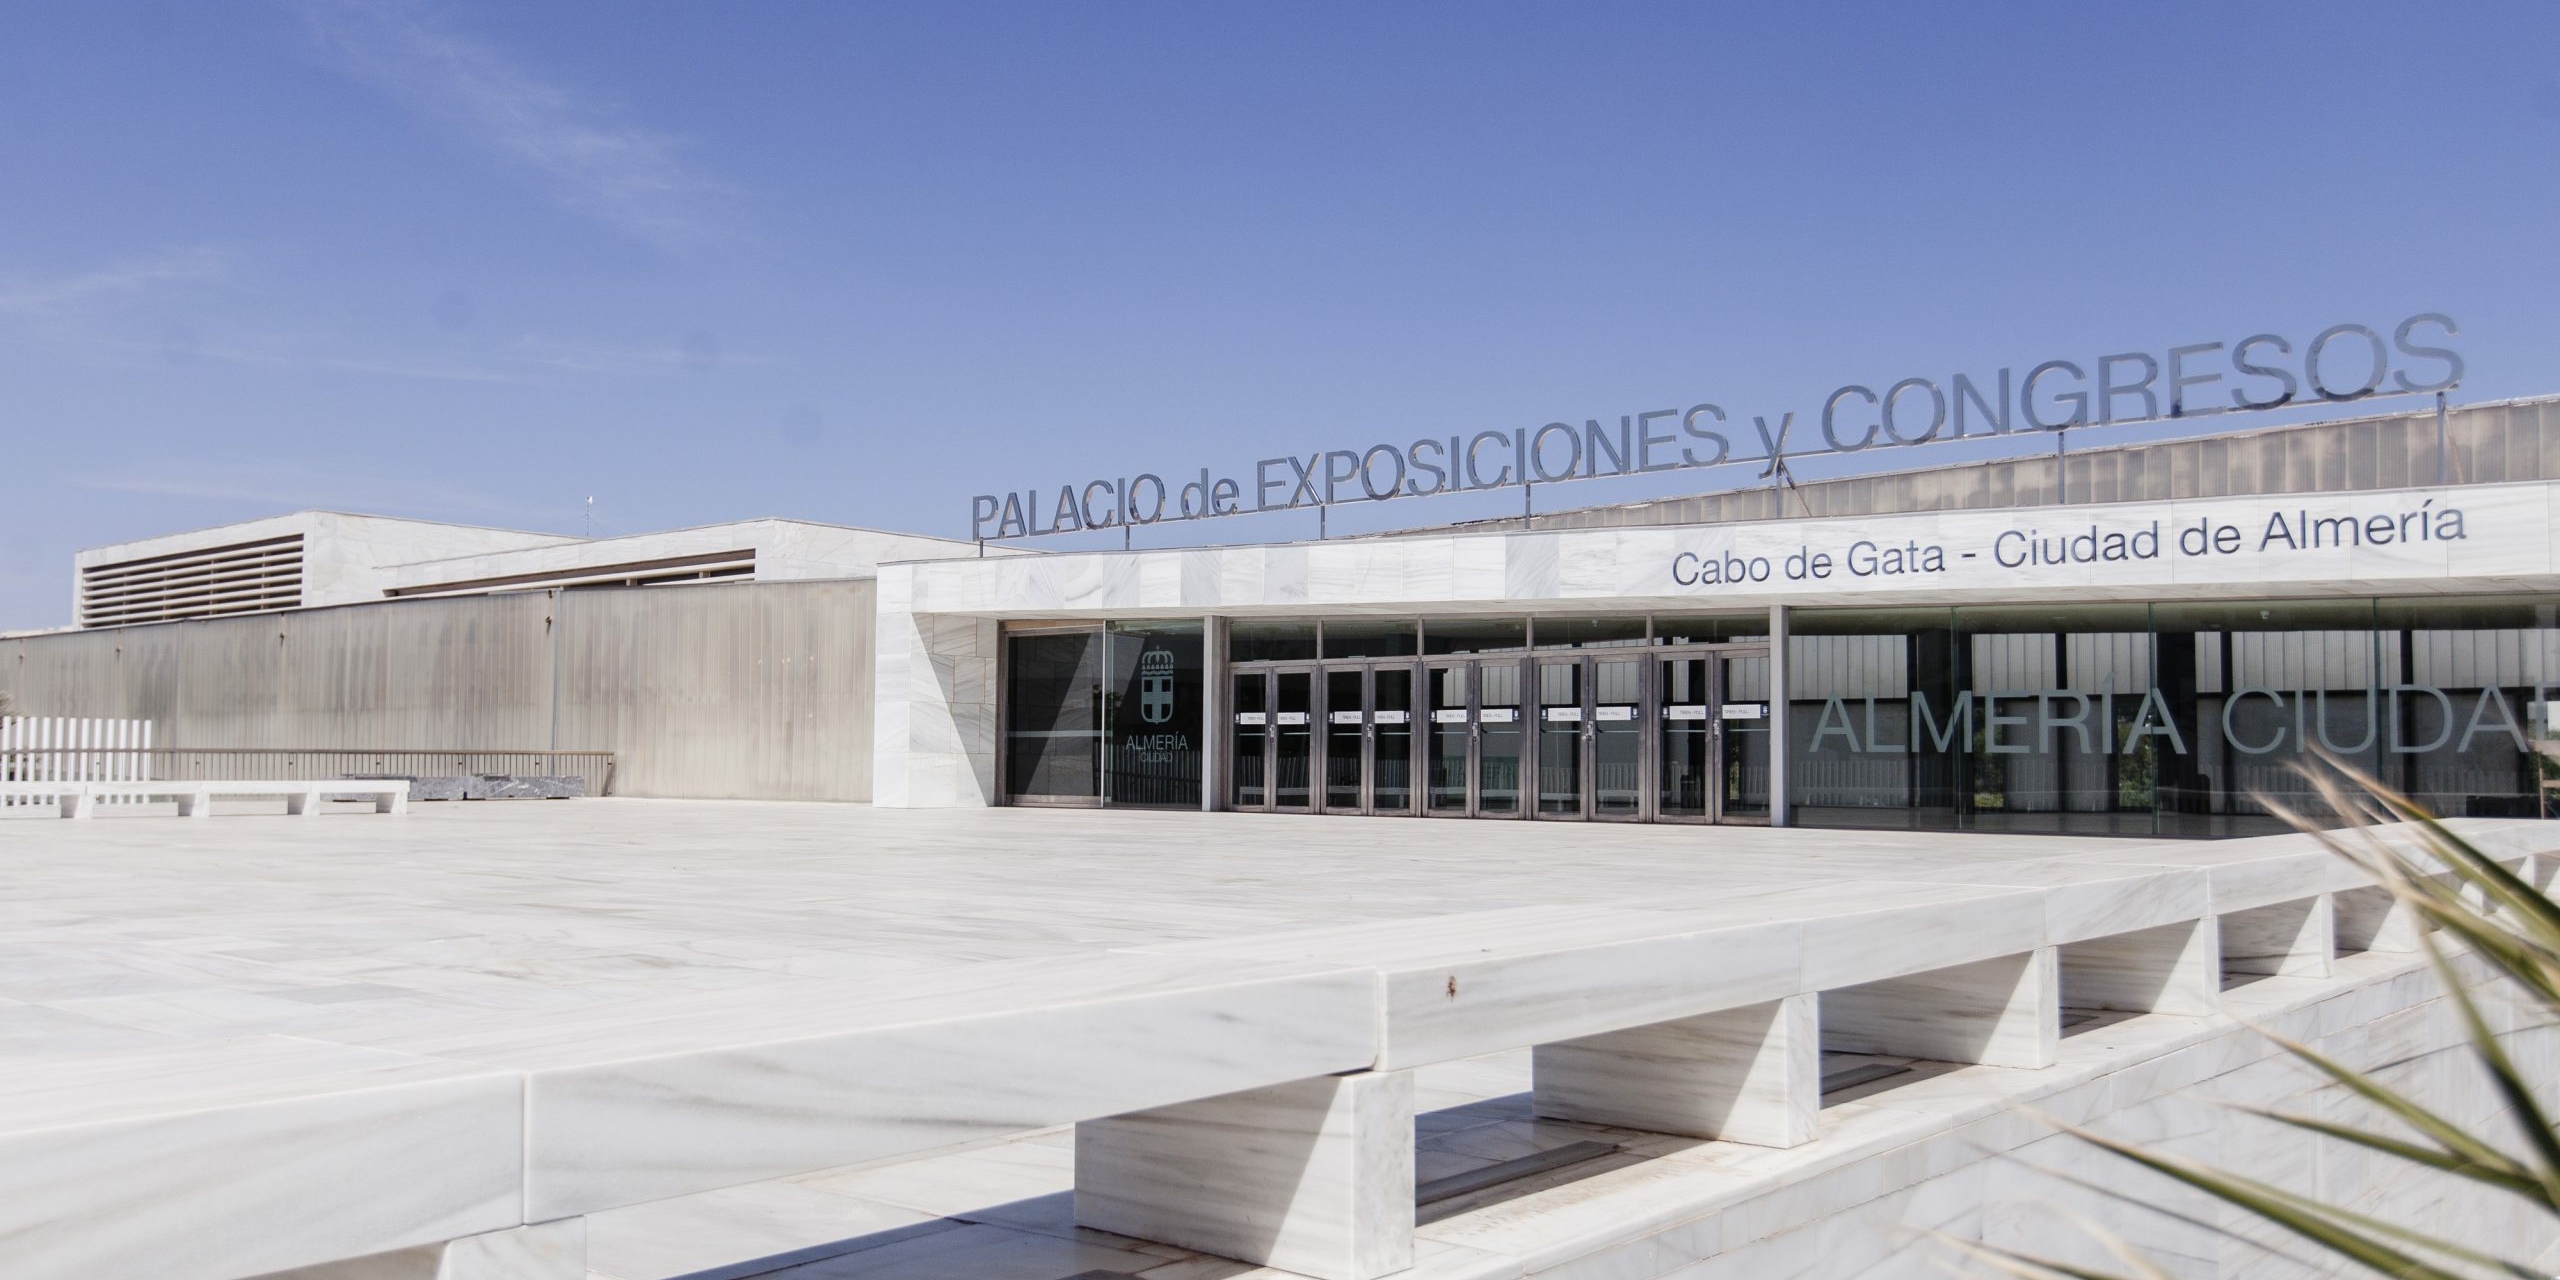 palaciodeexposicionesycongresos scaled uai - Turismo Almería